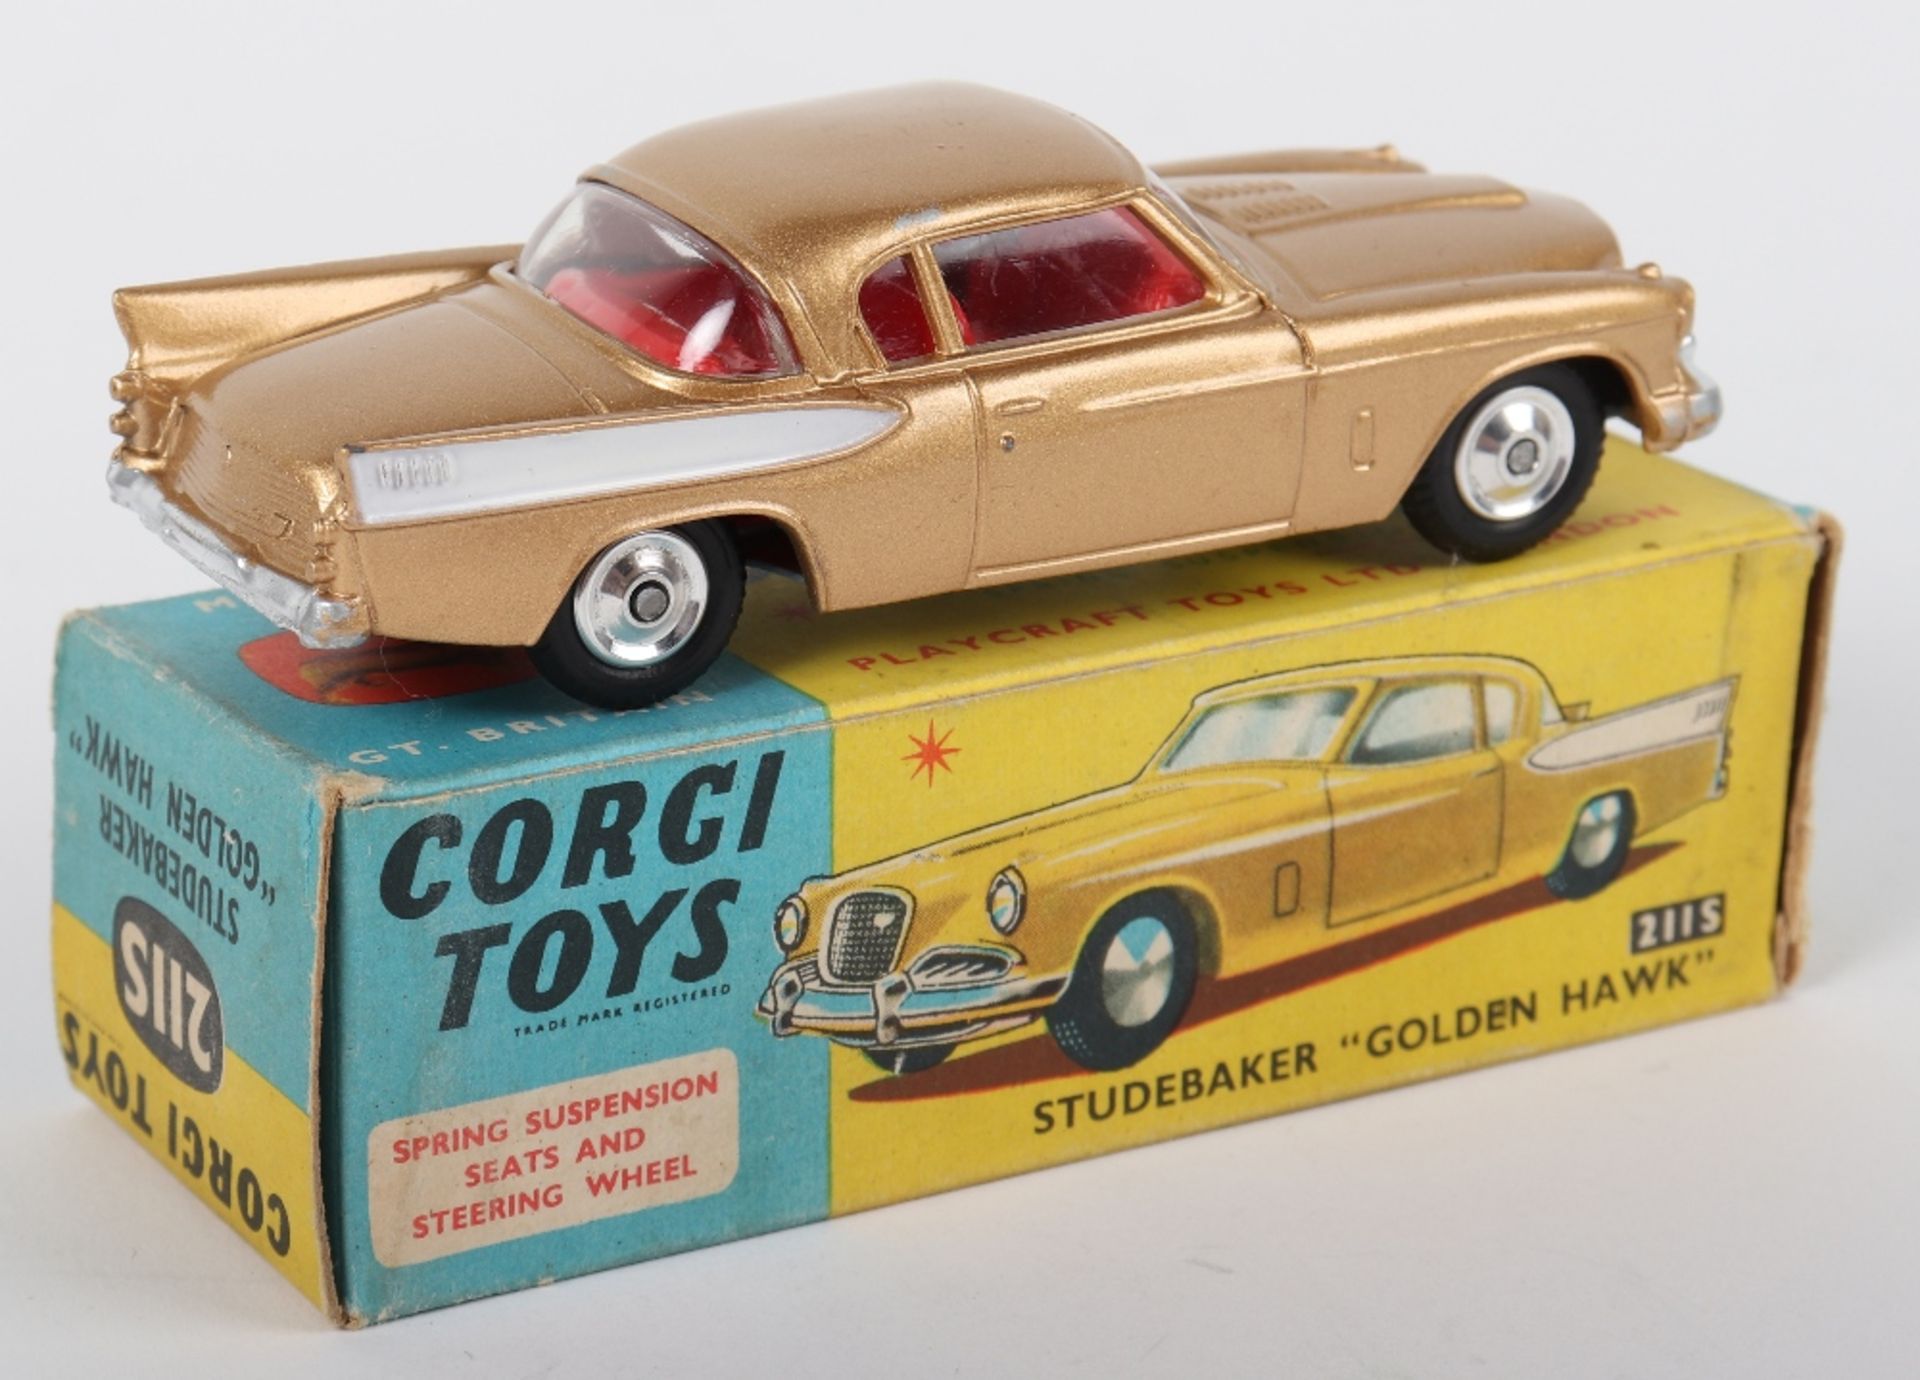 Corgi Toys 211S Studebaker “Golden Hawk” - Image 2 of 2